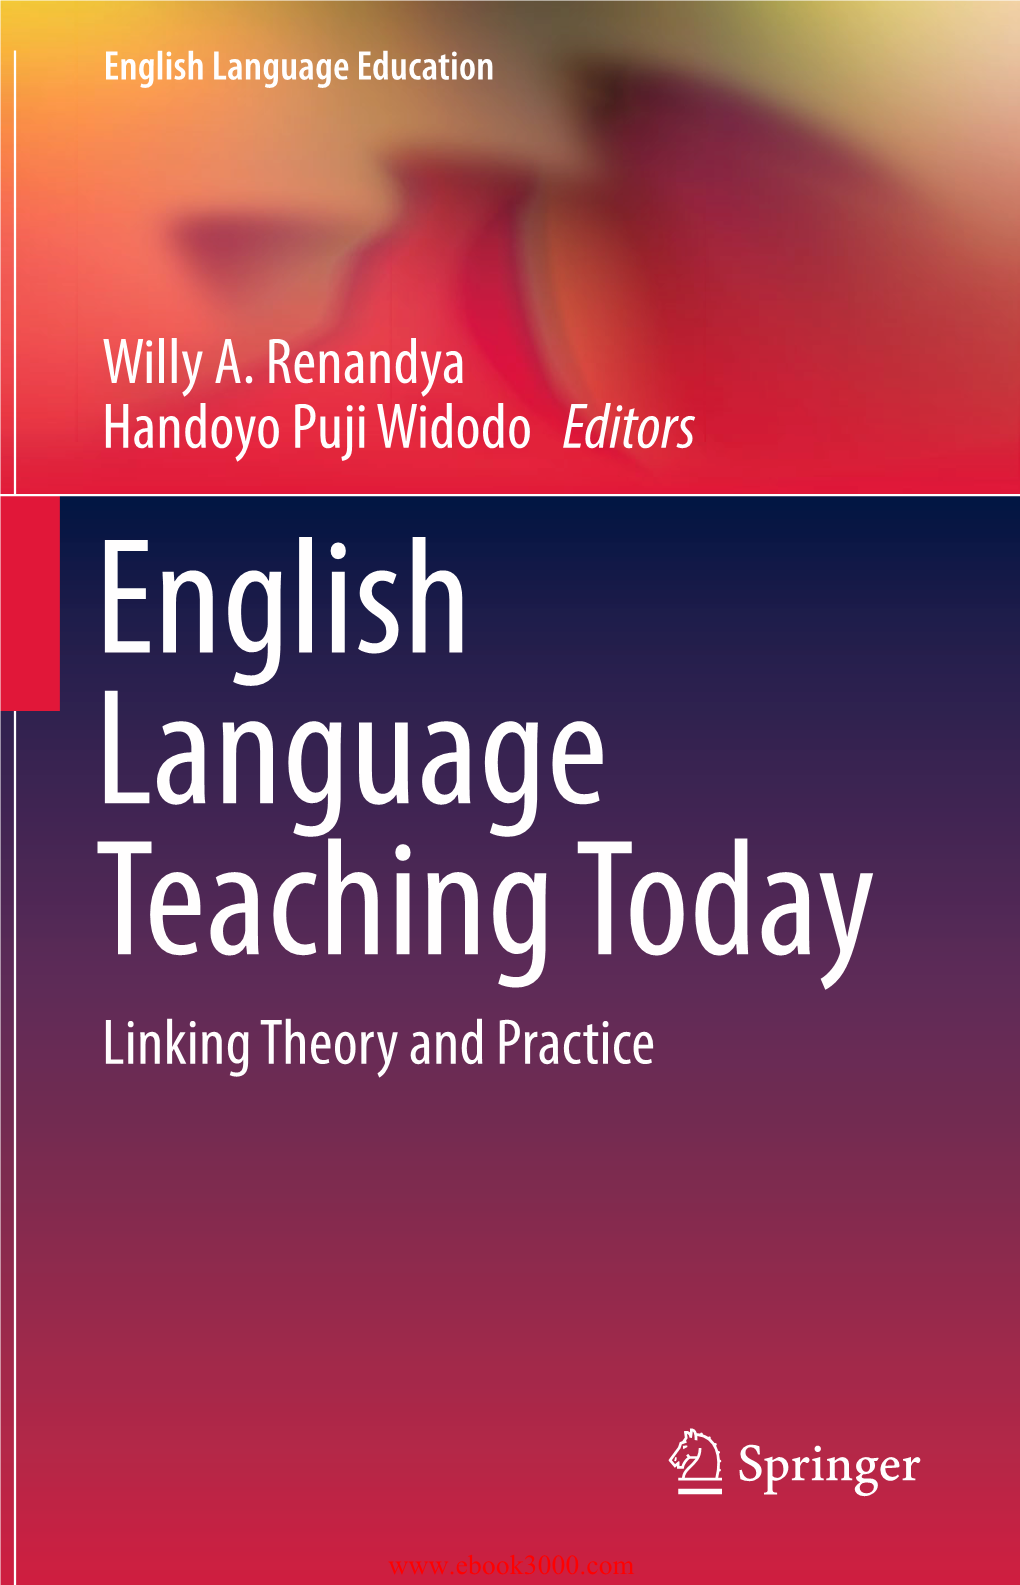 Willy A. Renandya Handoyo Puji Widodo Editors Linking Theory and Practice